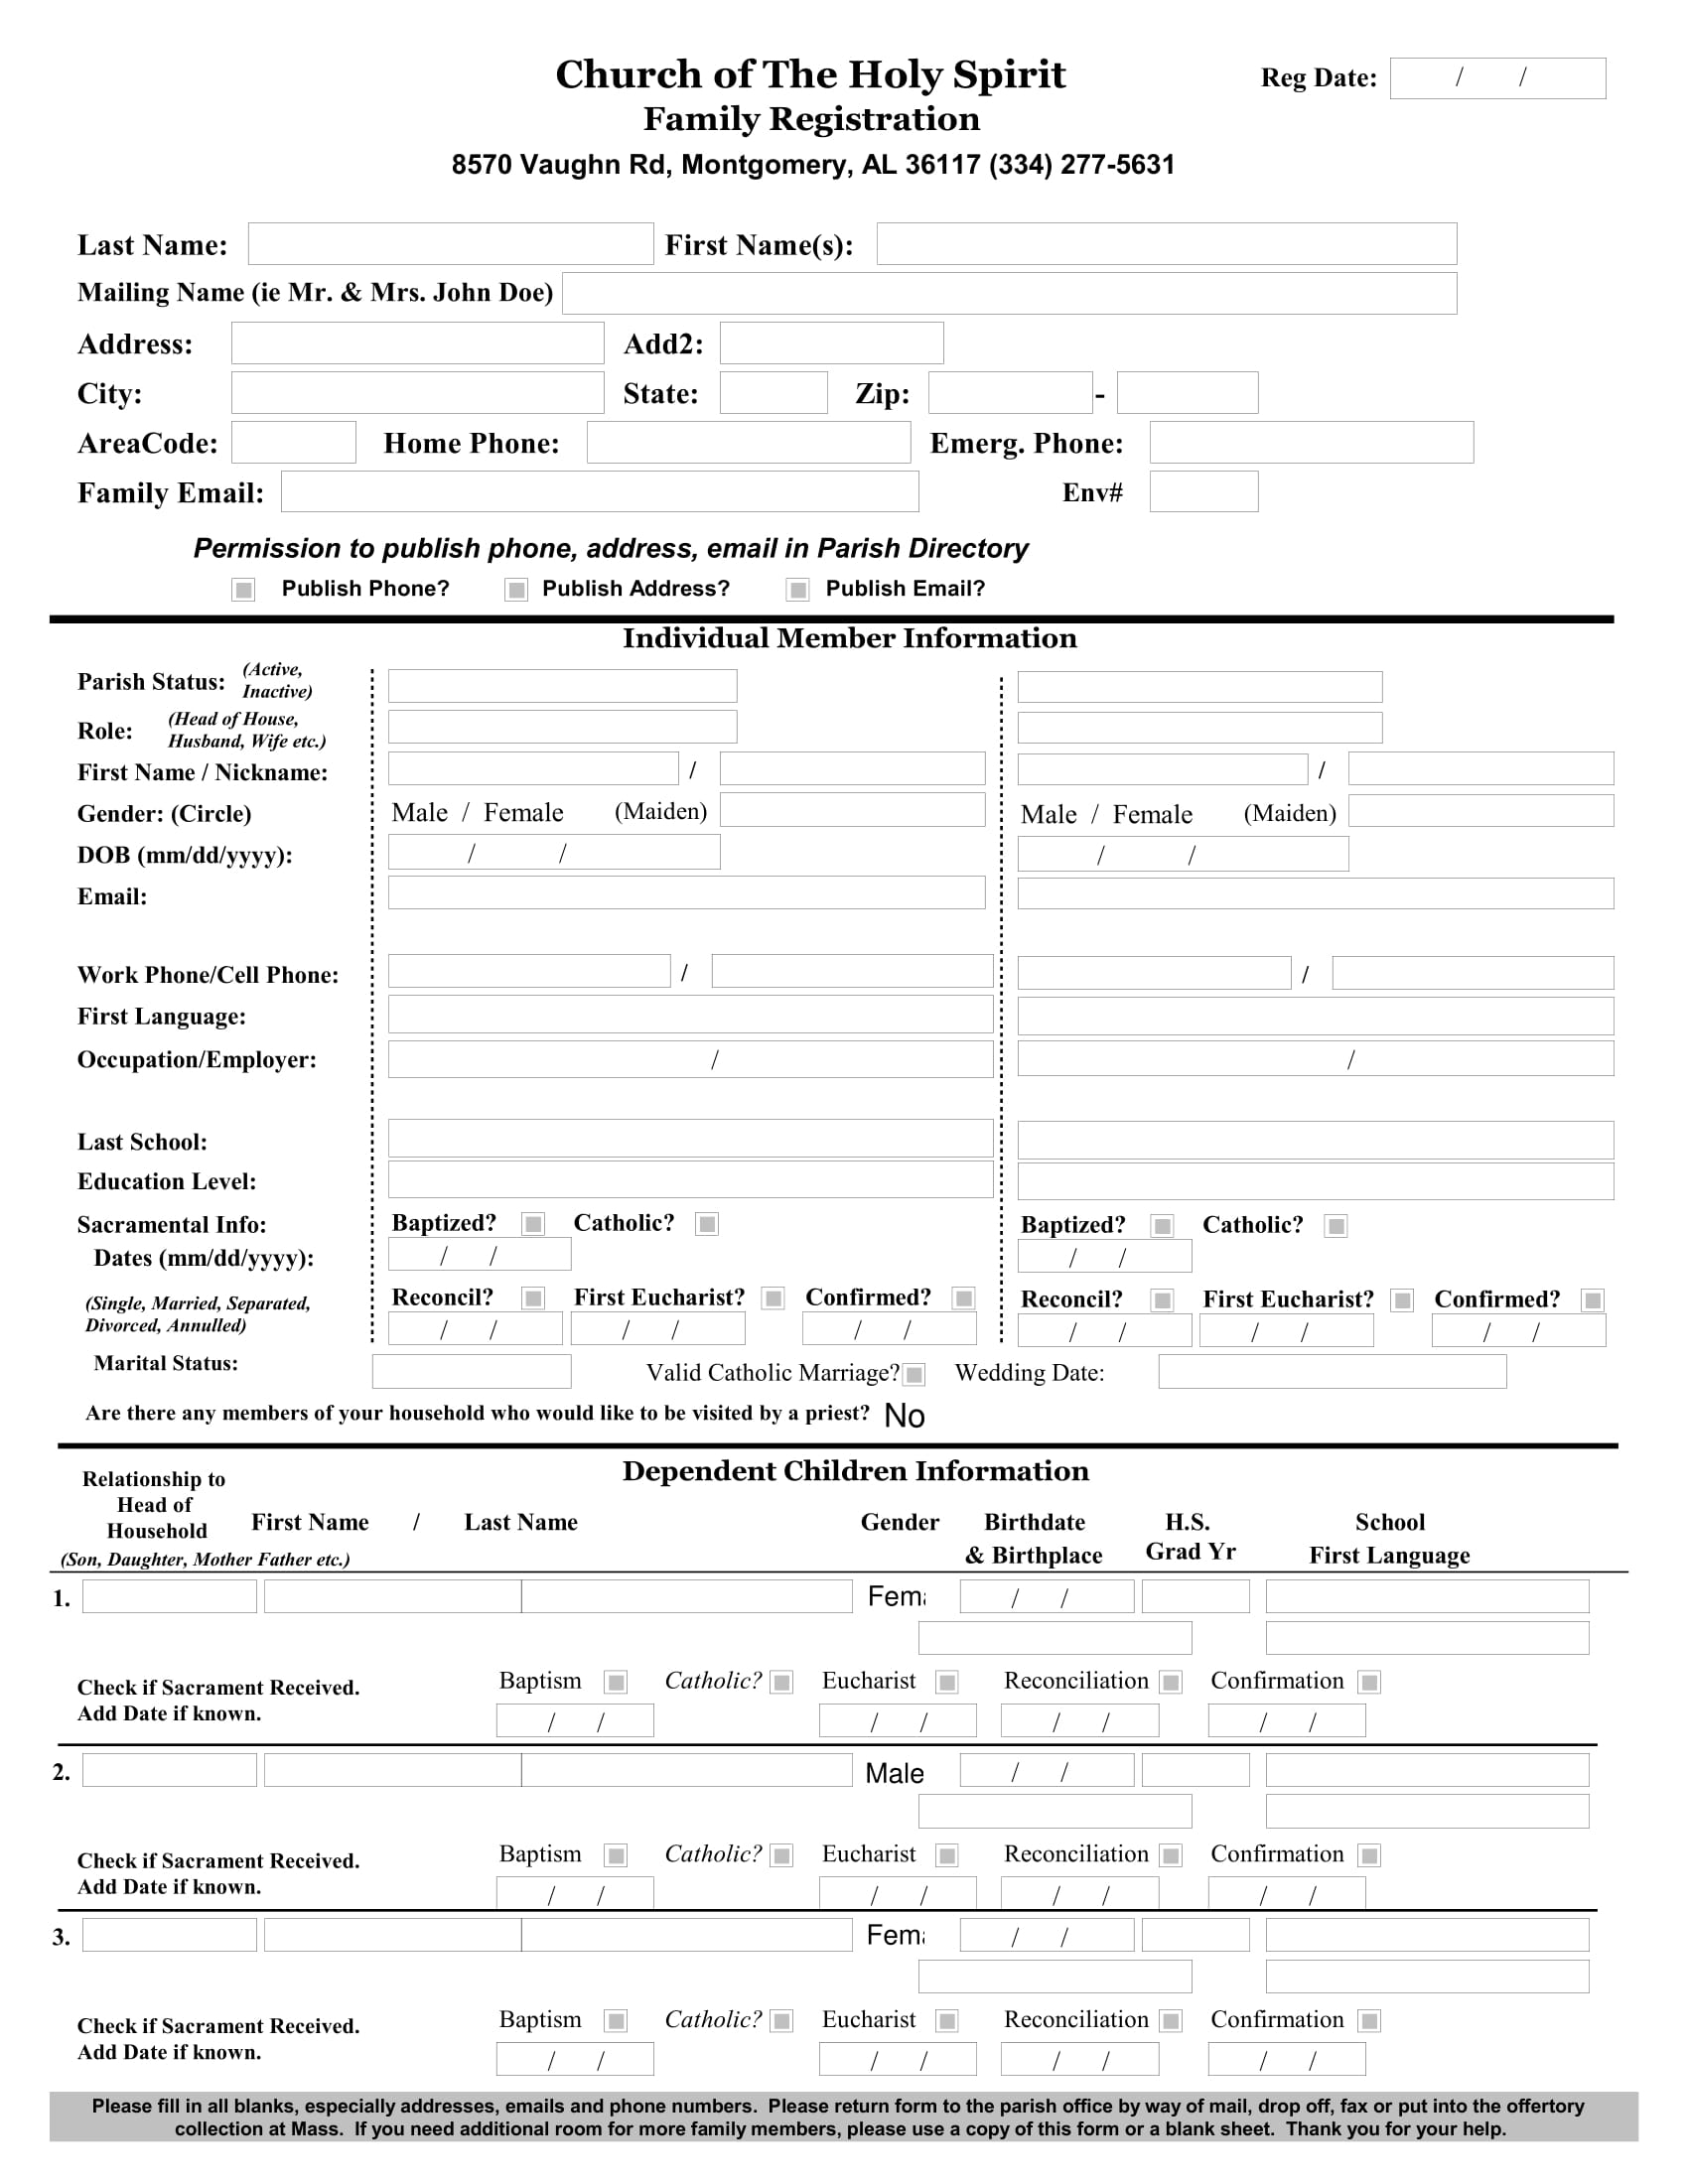 blank family registration form 1